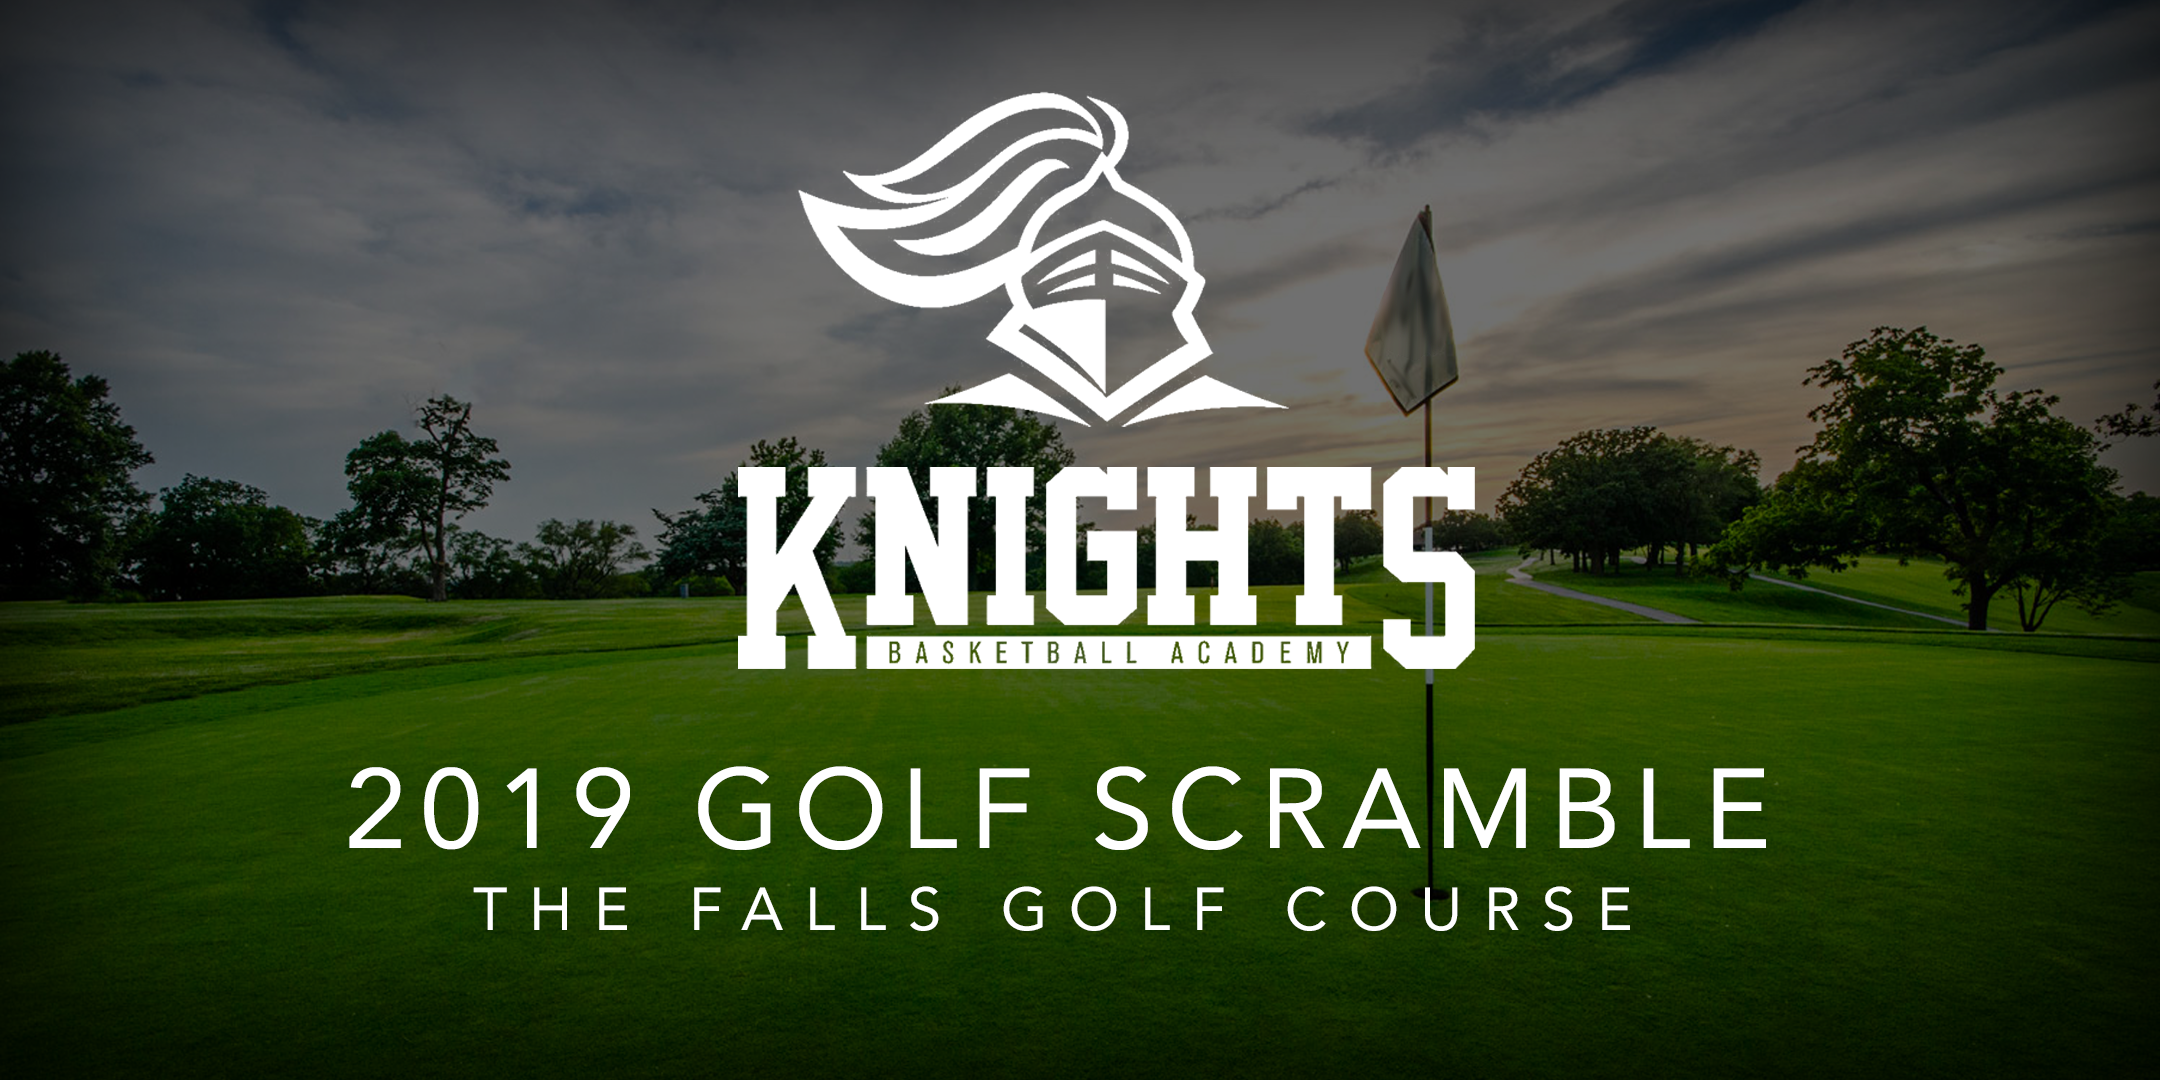 Knights Basketball Academy Golf Scramble